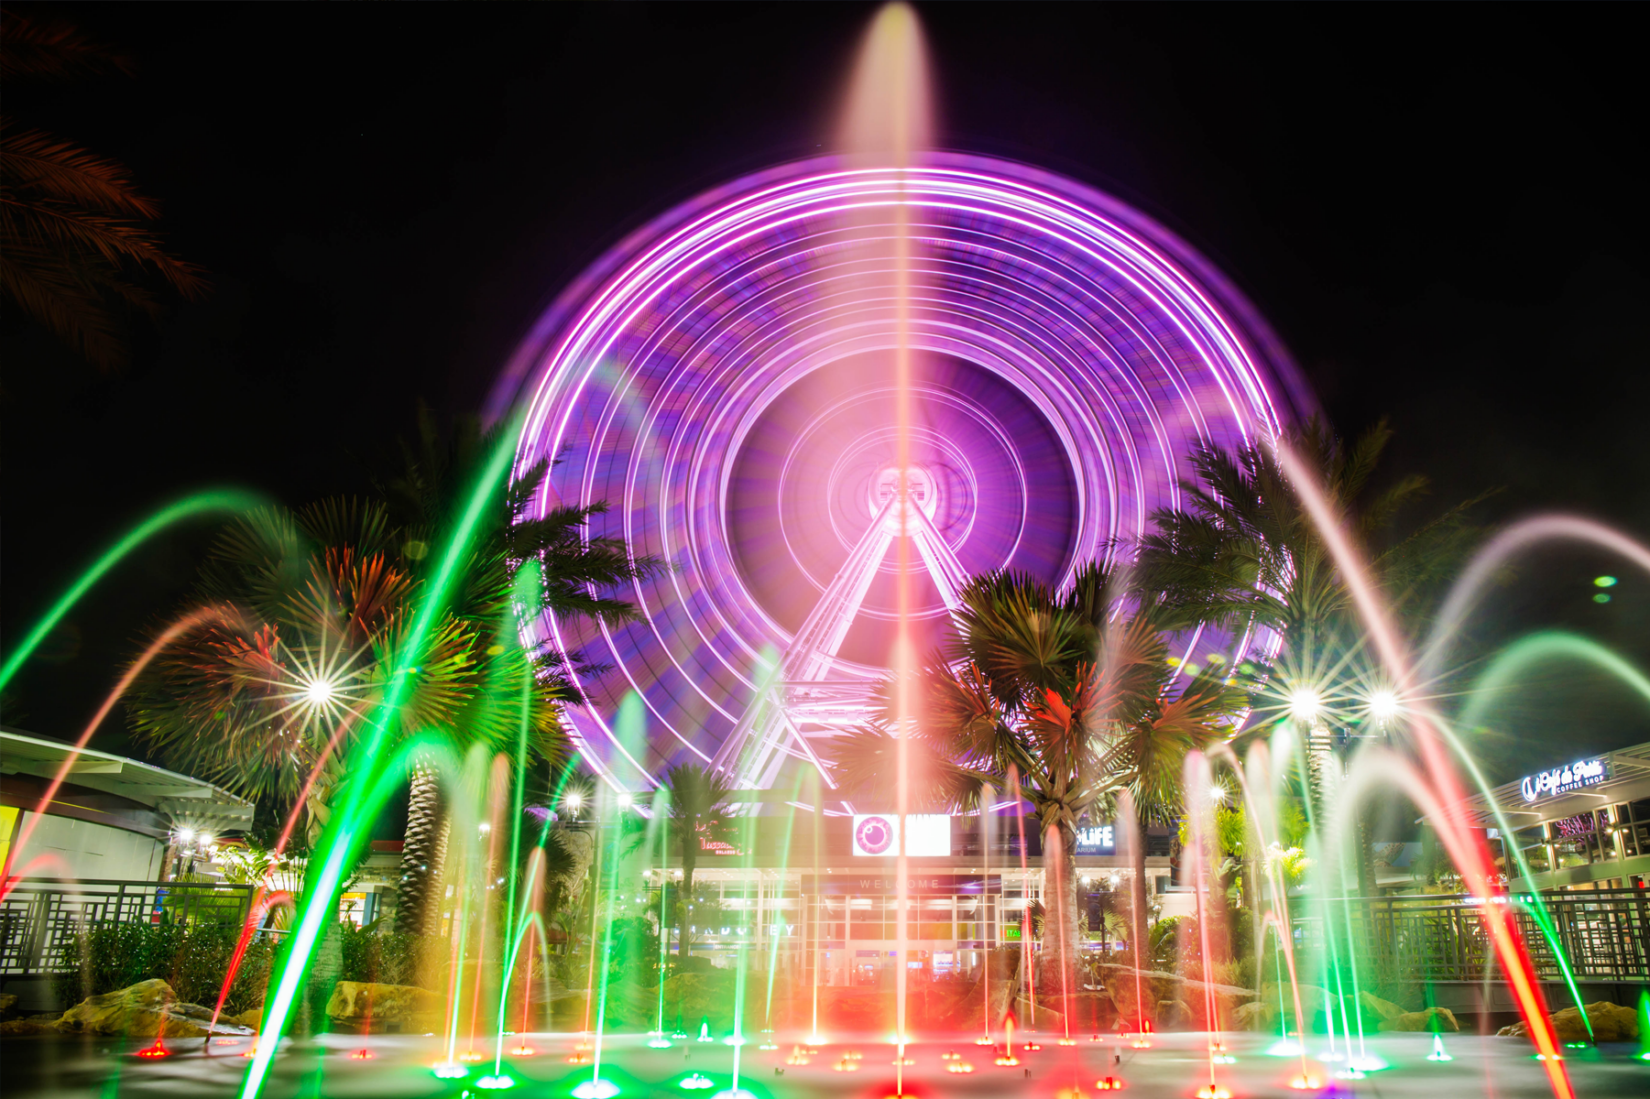 The Orlando Eye ferris wheel lit up at night in purple.